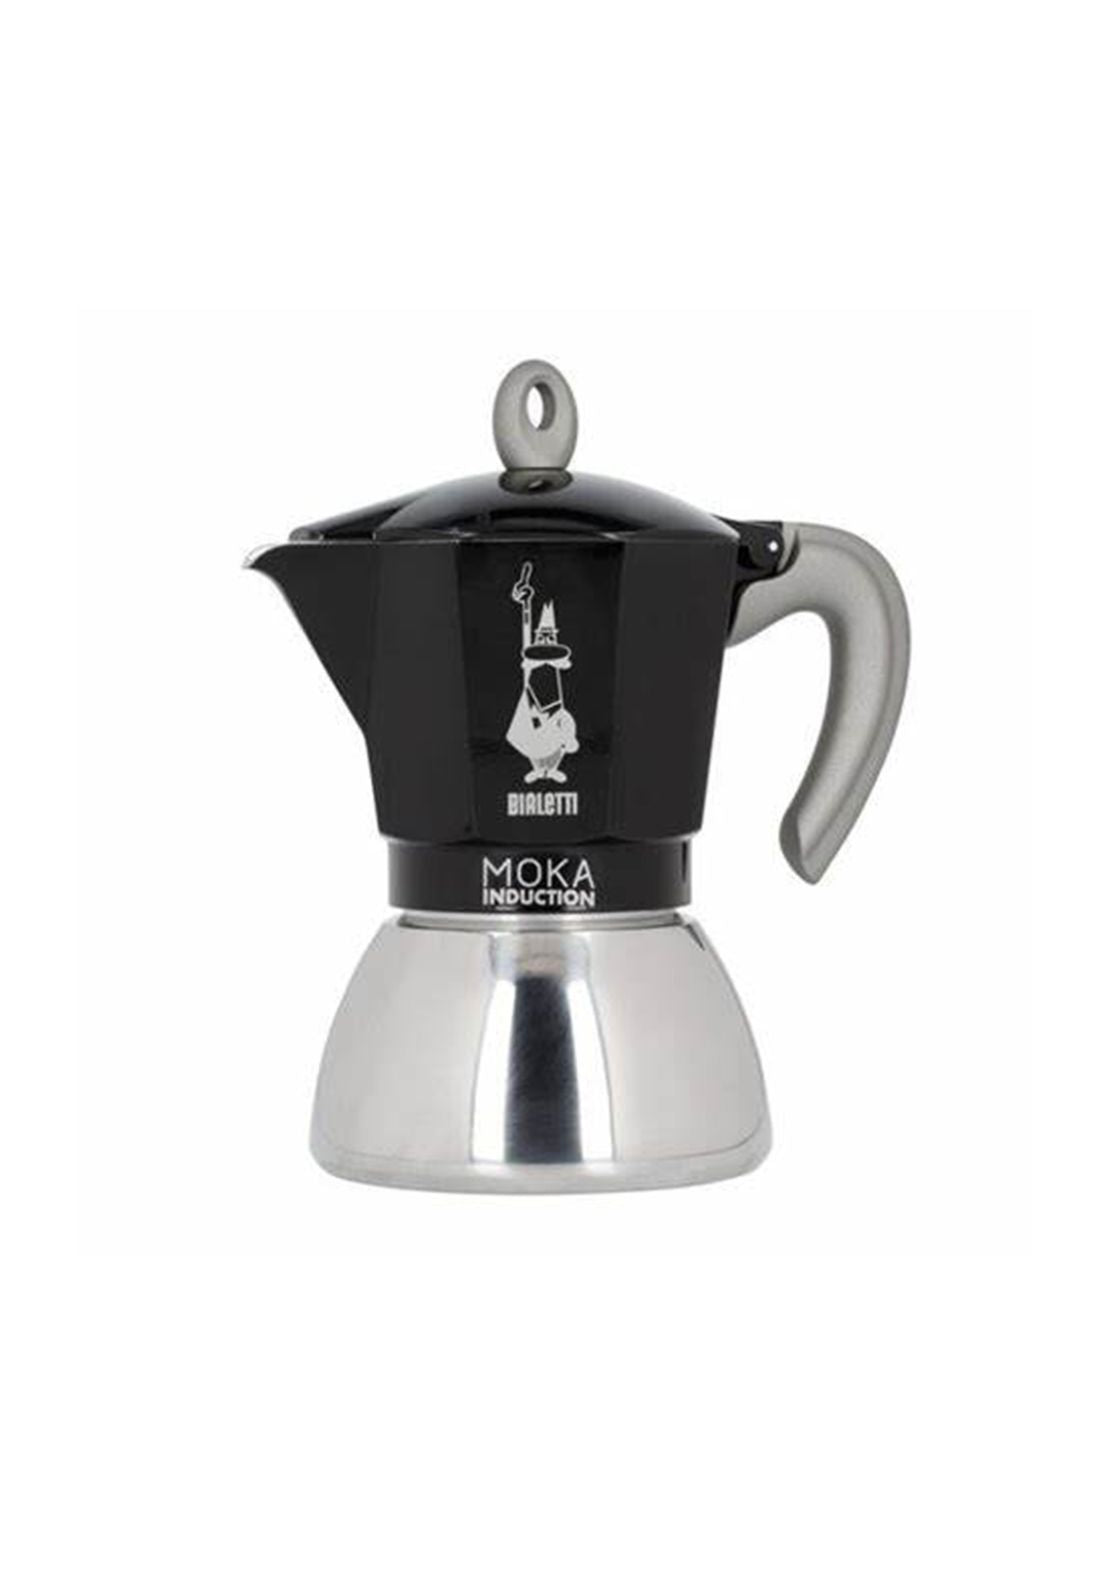 Bialetti Moka 6Cup Espresso Coffee Maker | 6936 1 Shaws Department Stores